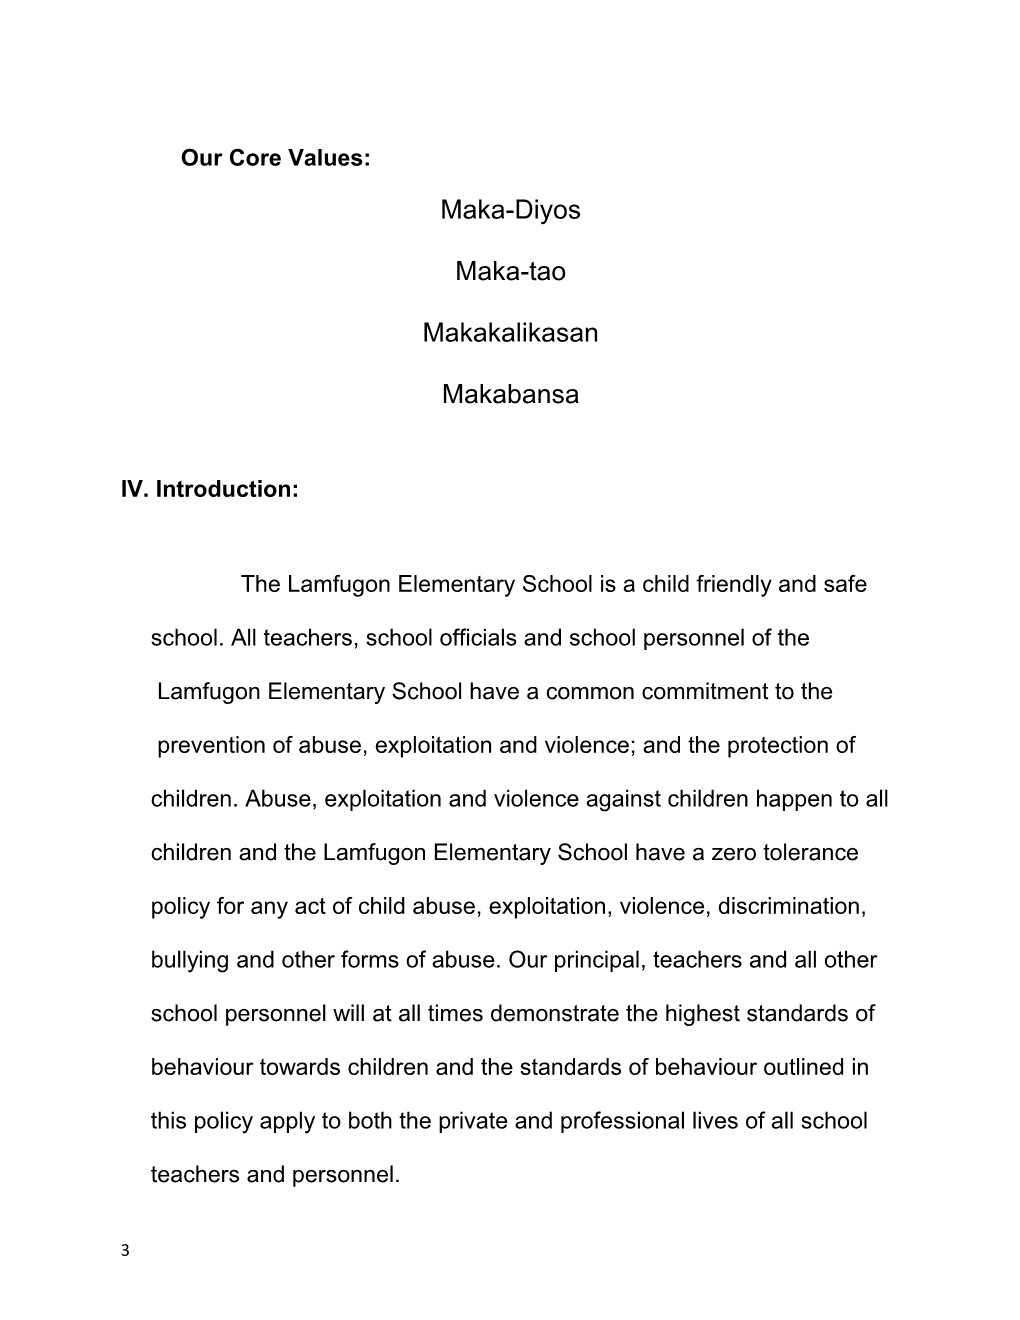 II. School Child Protection Committee Endorsement